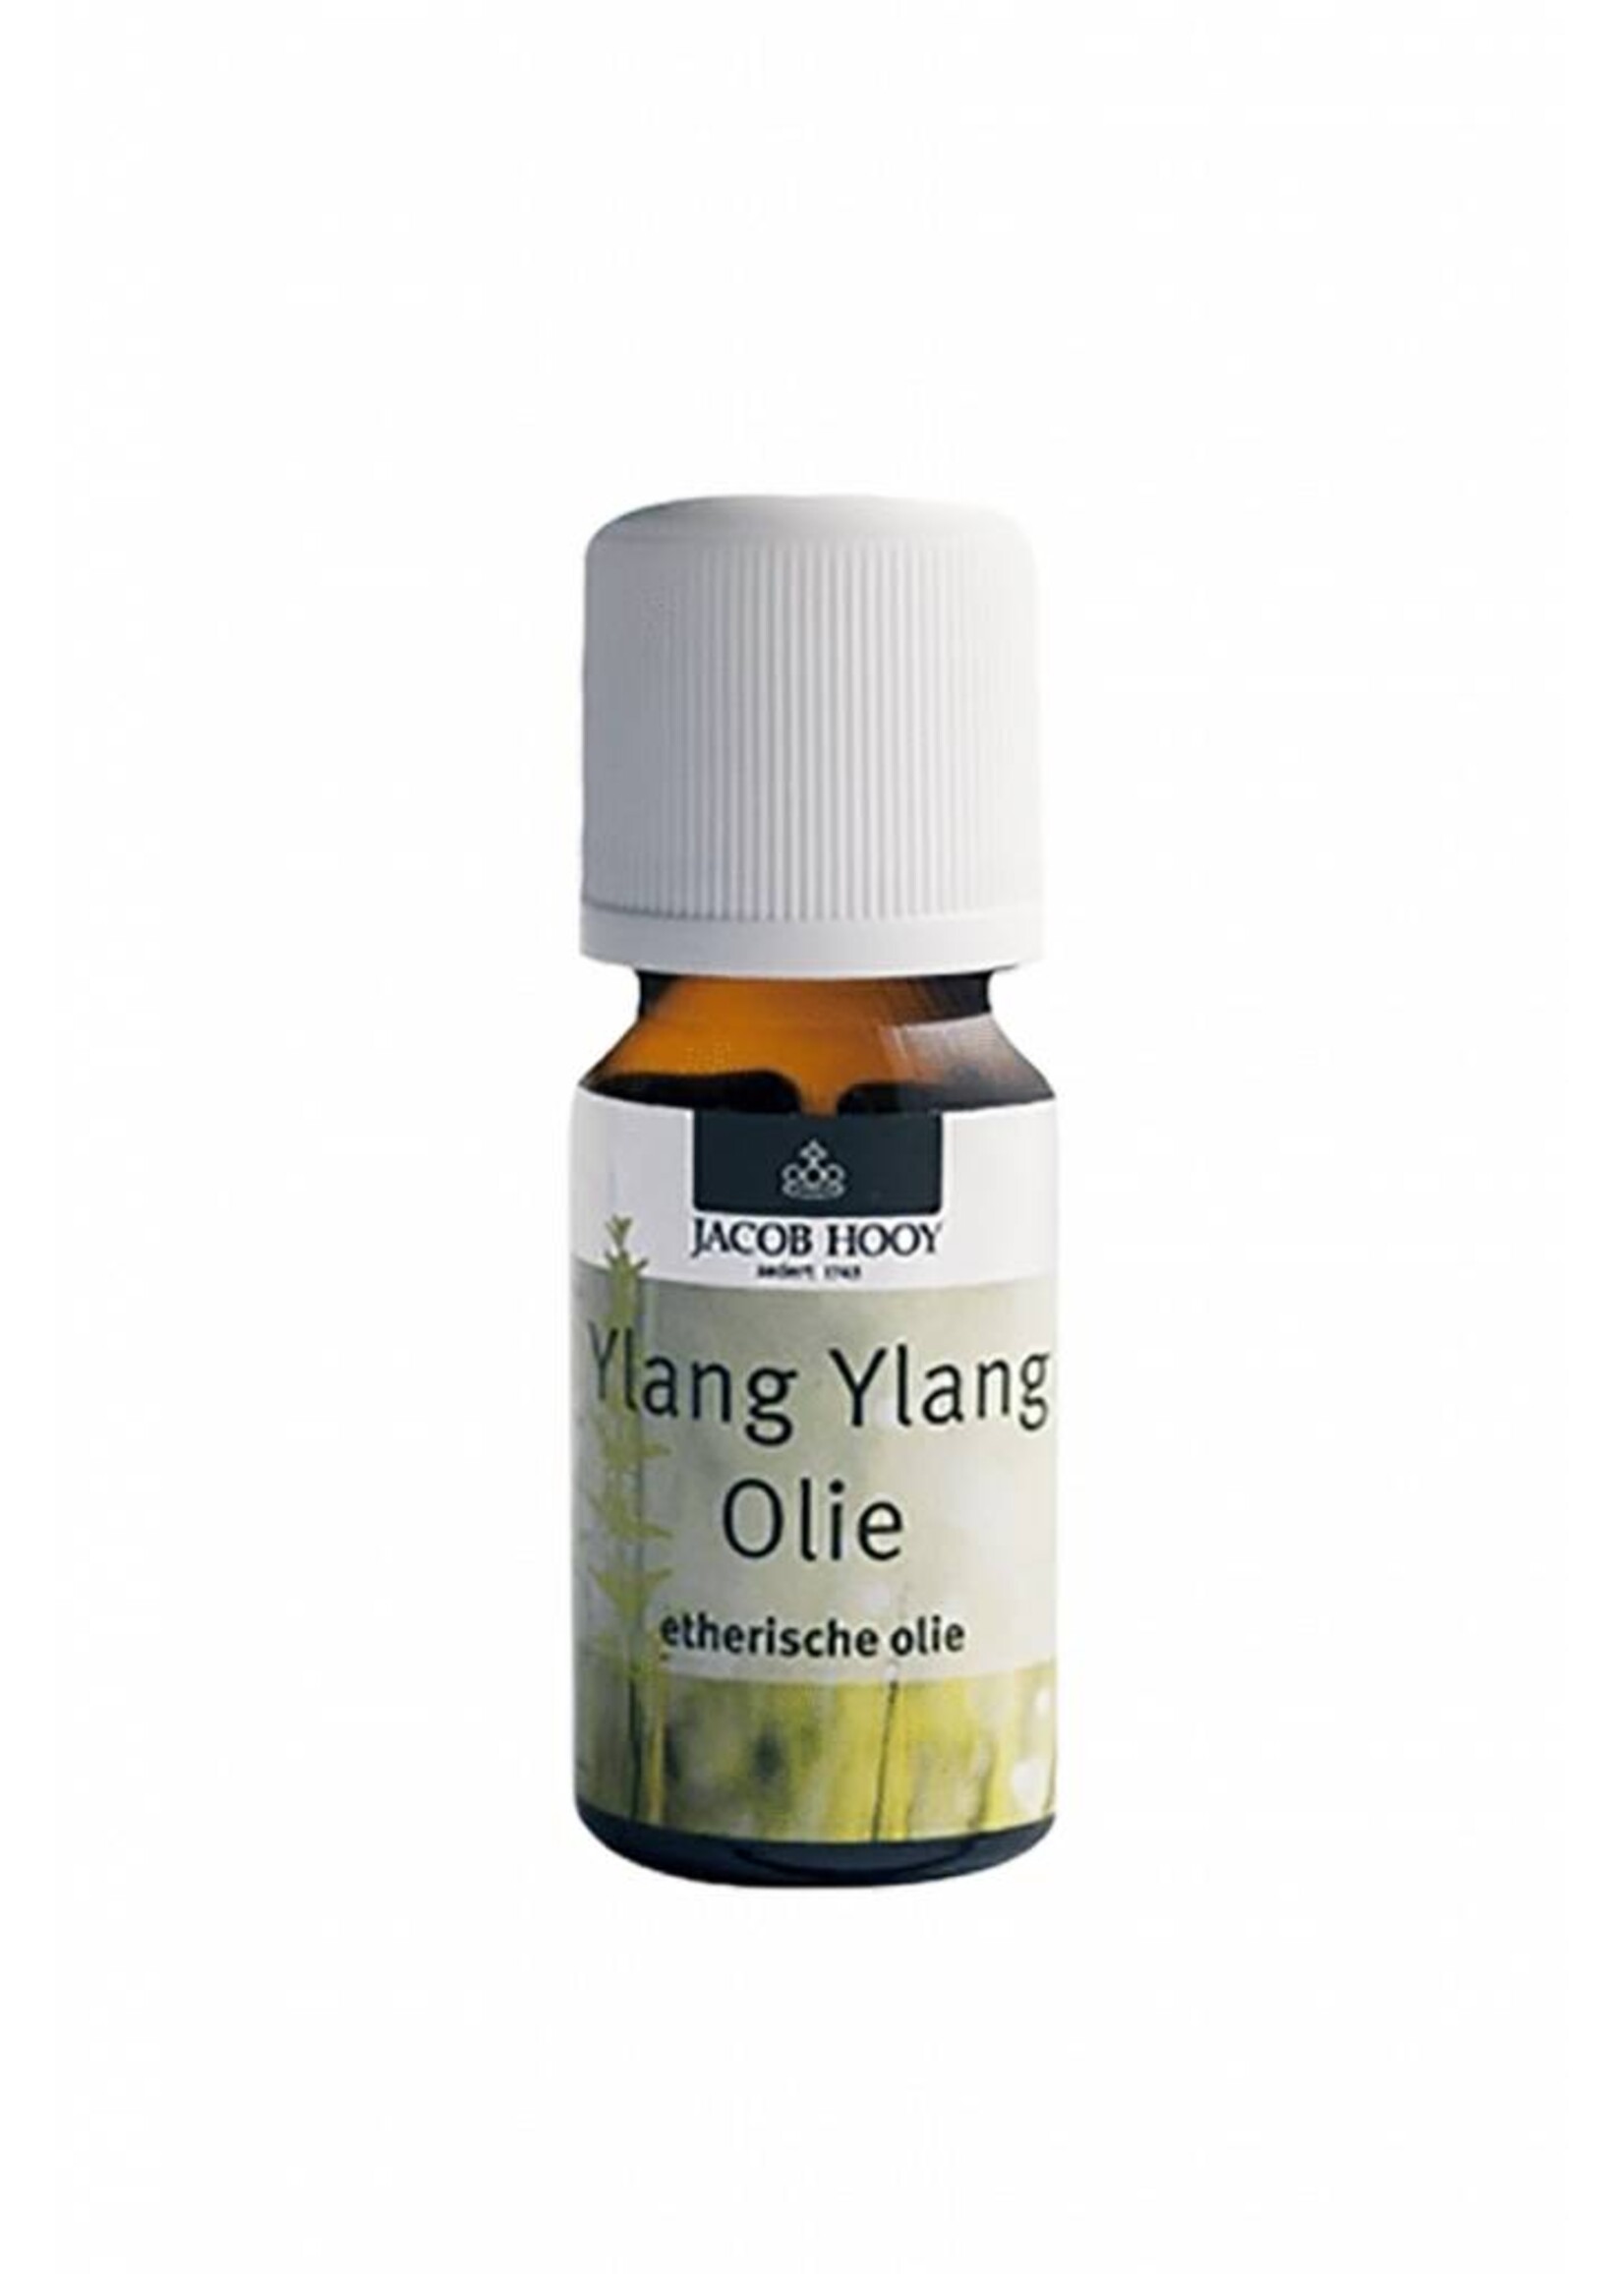 Jacob Hooy Etherische olie Ylang-Ylang, 10 ml.